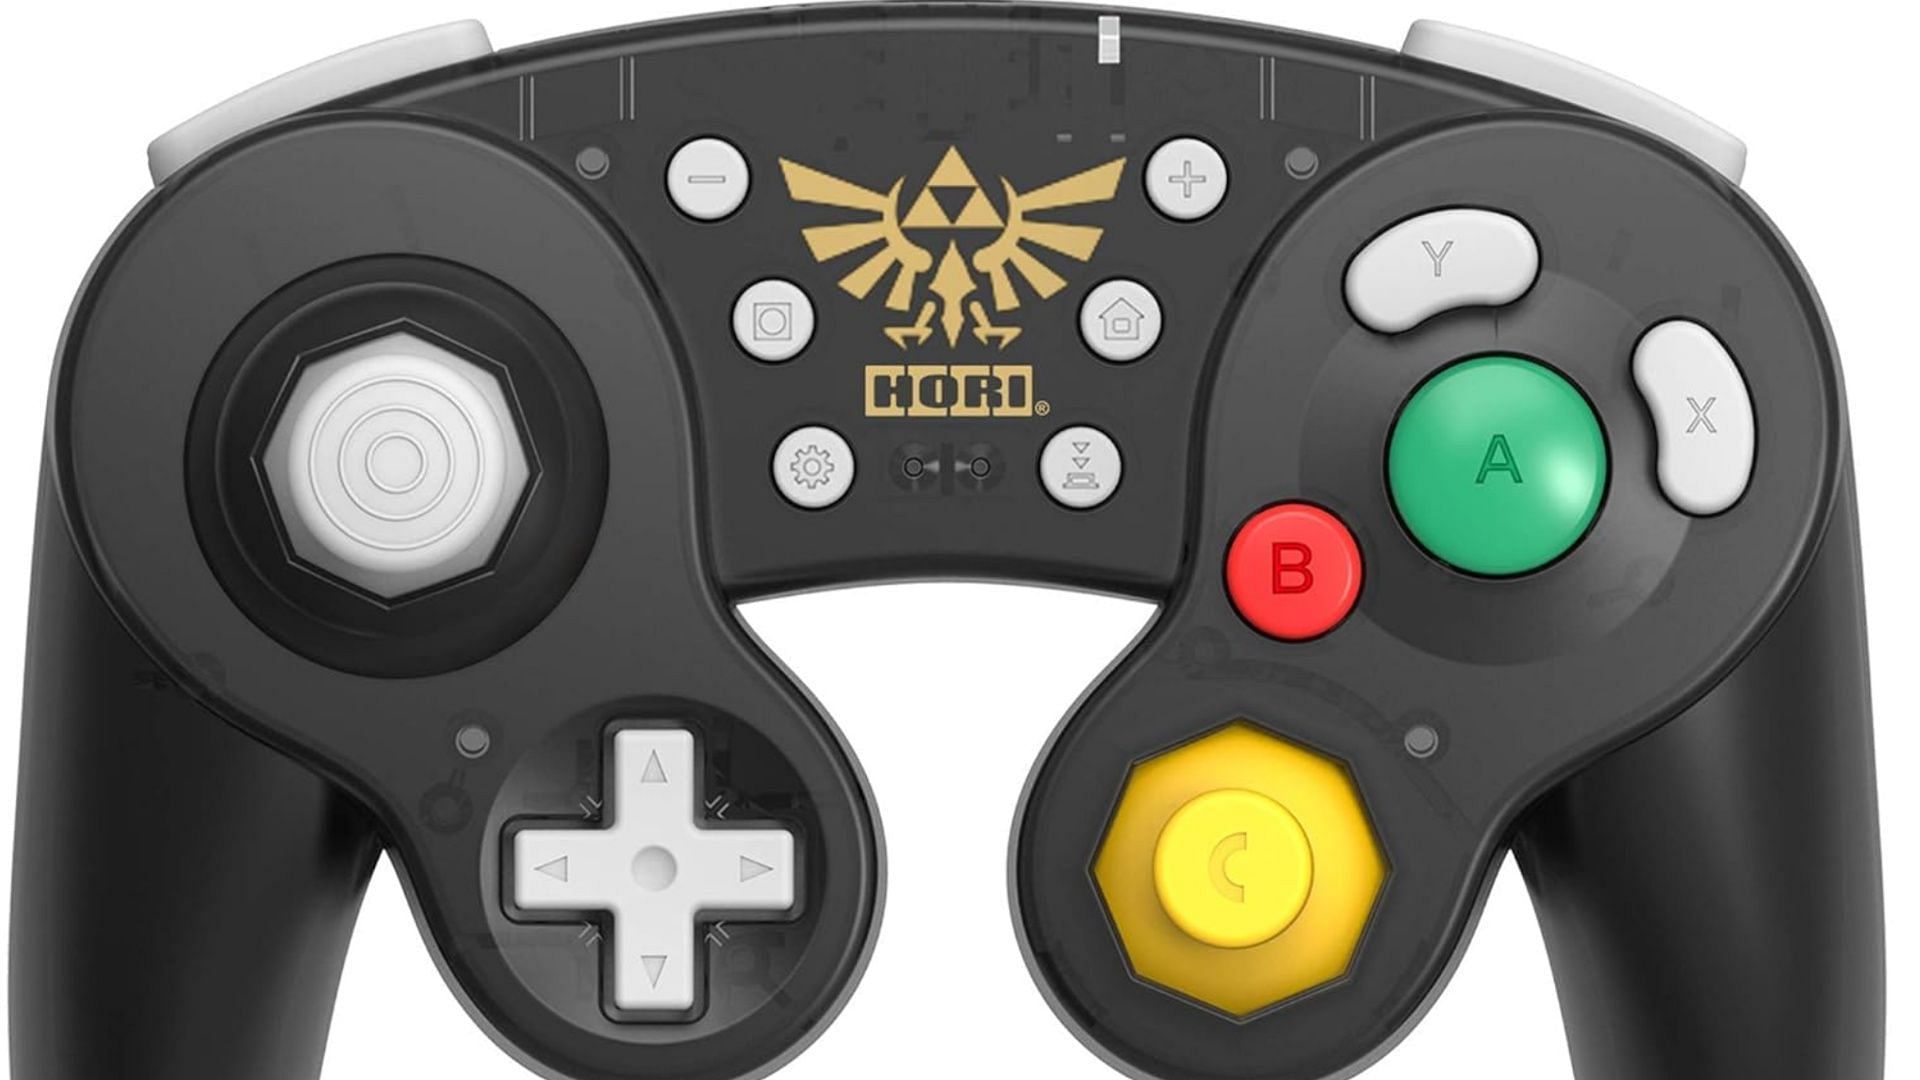 The Zelda insignia adds to the aesthetic (Image via HORI)